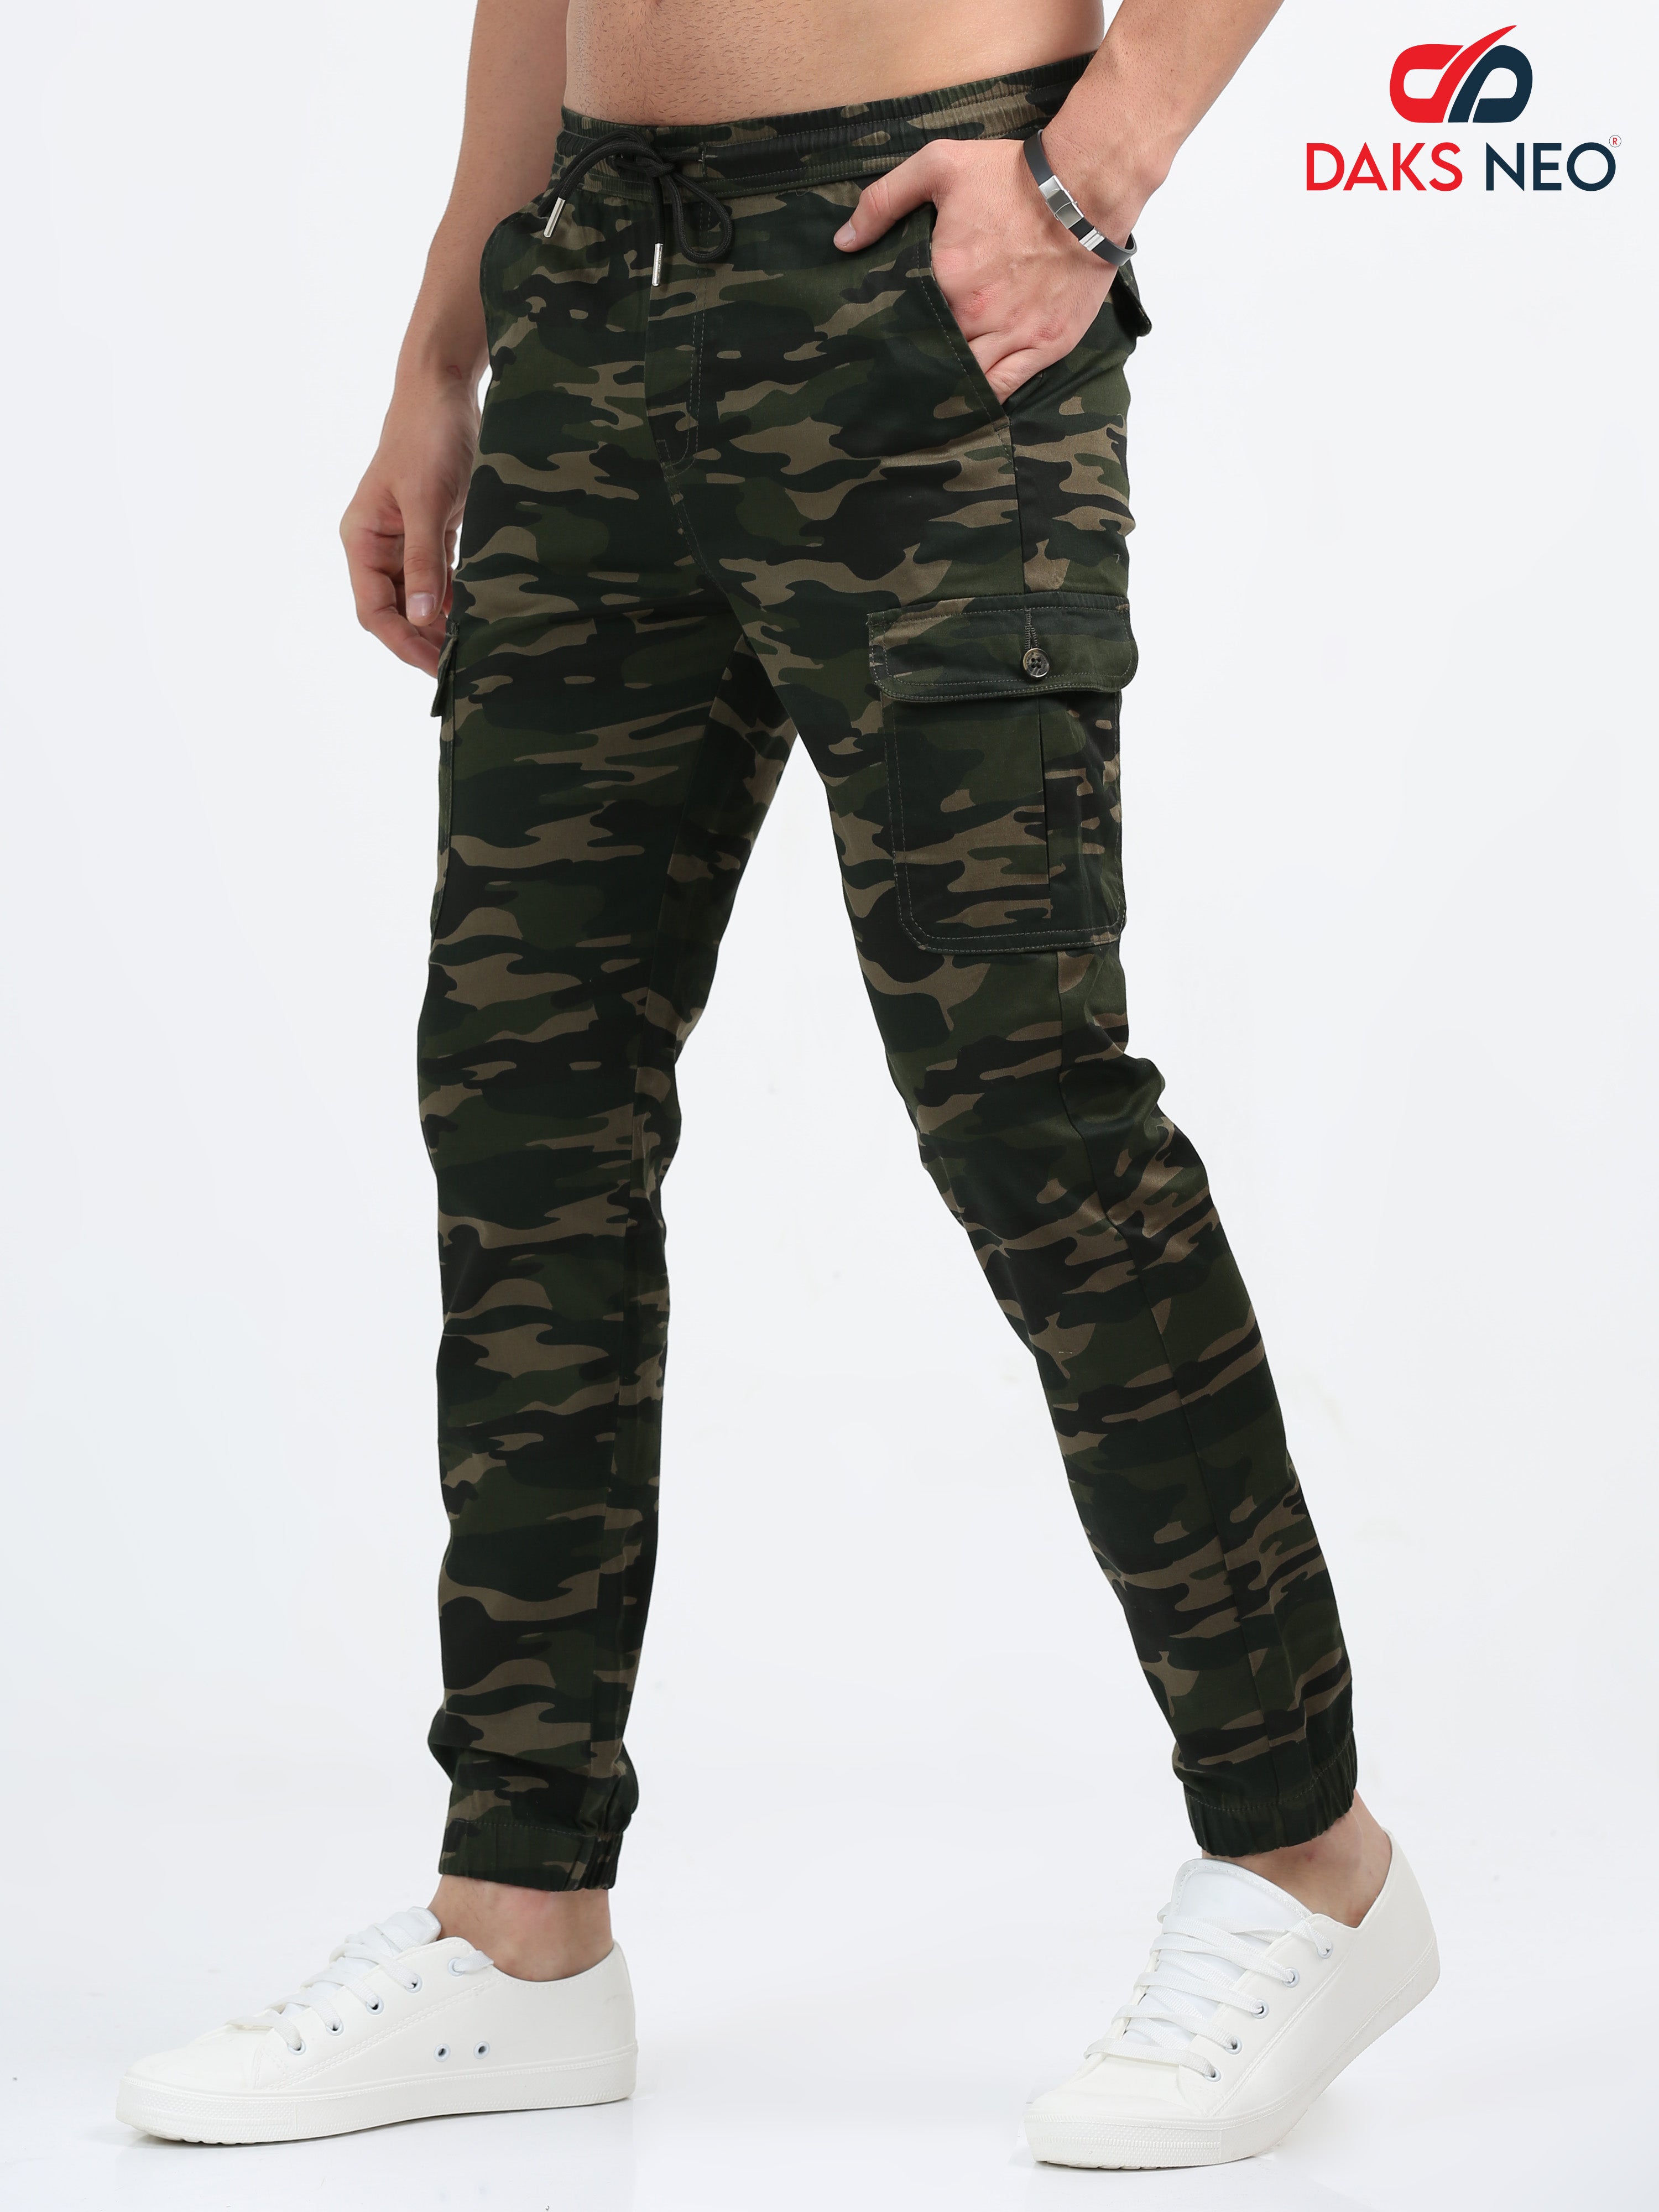 Mens ACU Trousers BTP Black Camo Fishing Military Army Combat Cargo Work  Pants | eBay